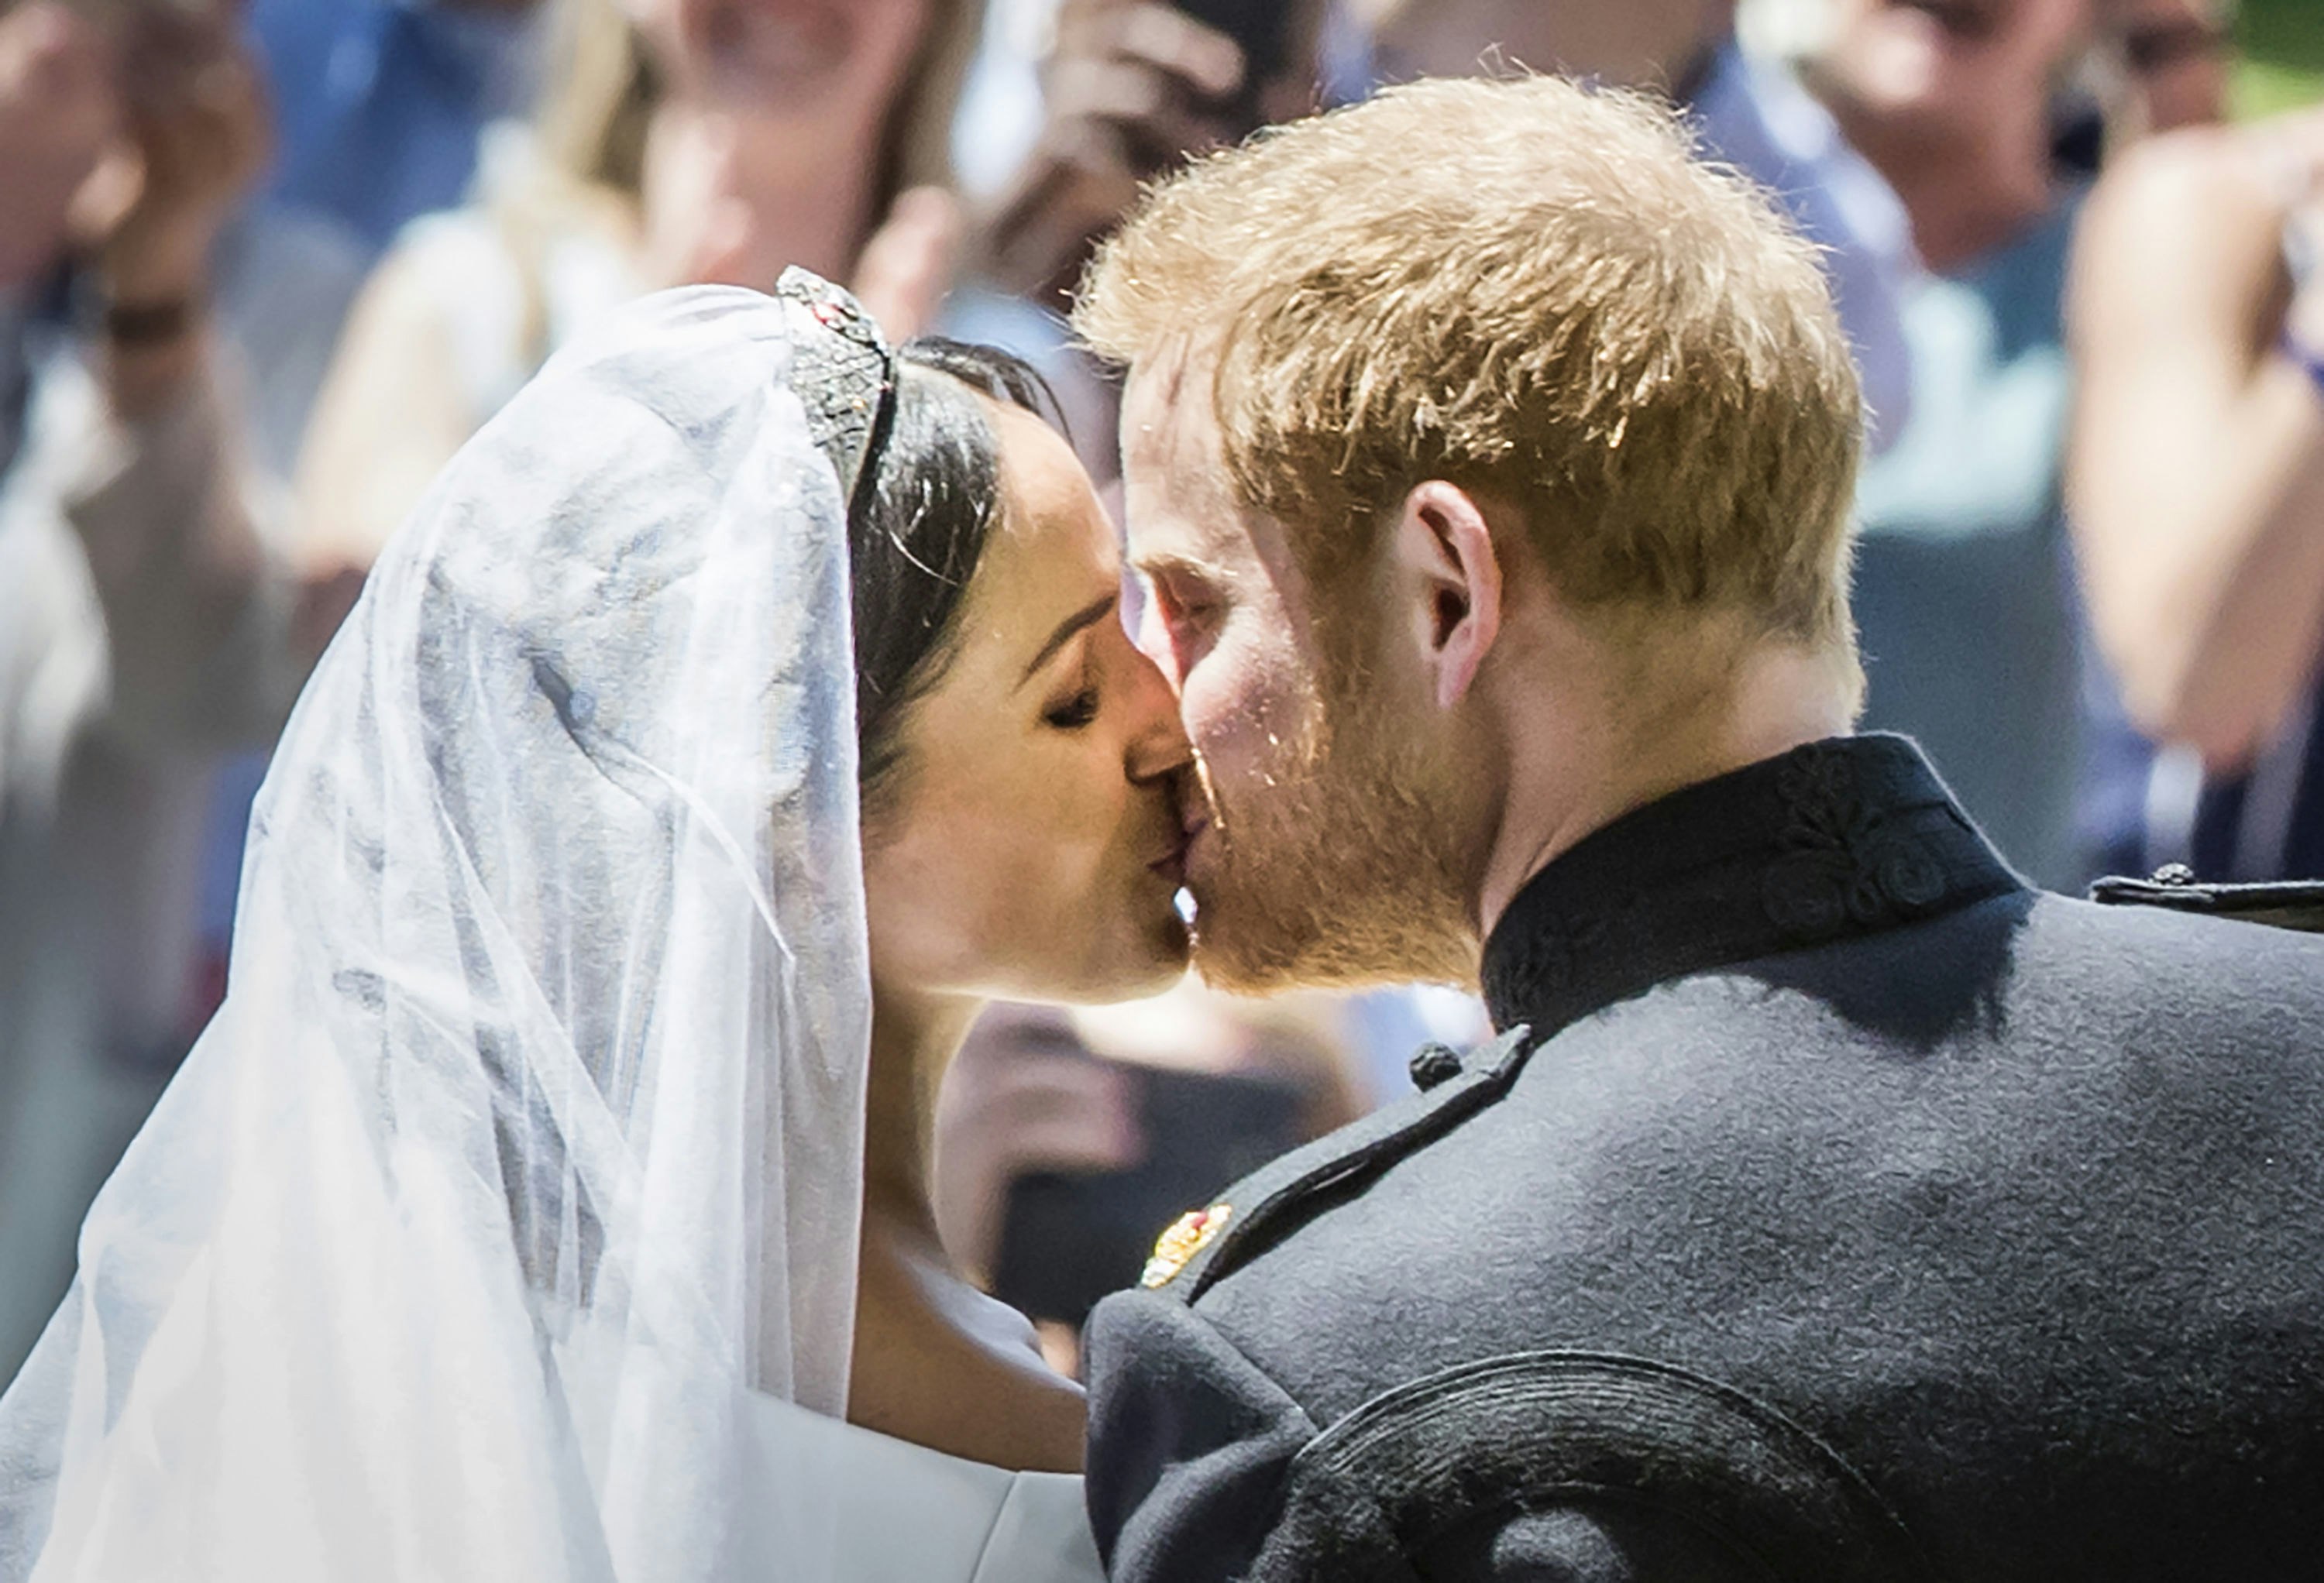 Meghan Markle's Royal Wedding Veil Is More Than 16 Feet Long